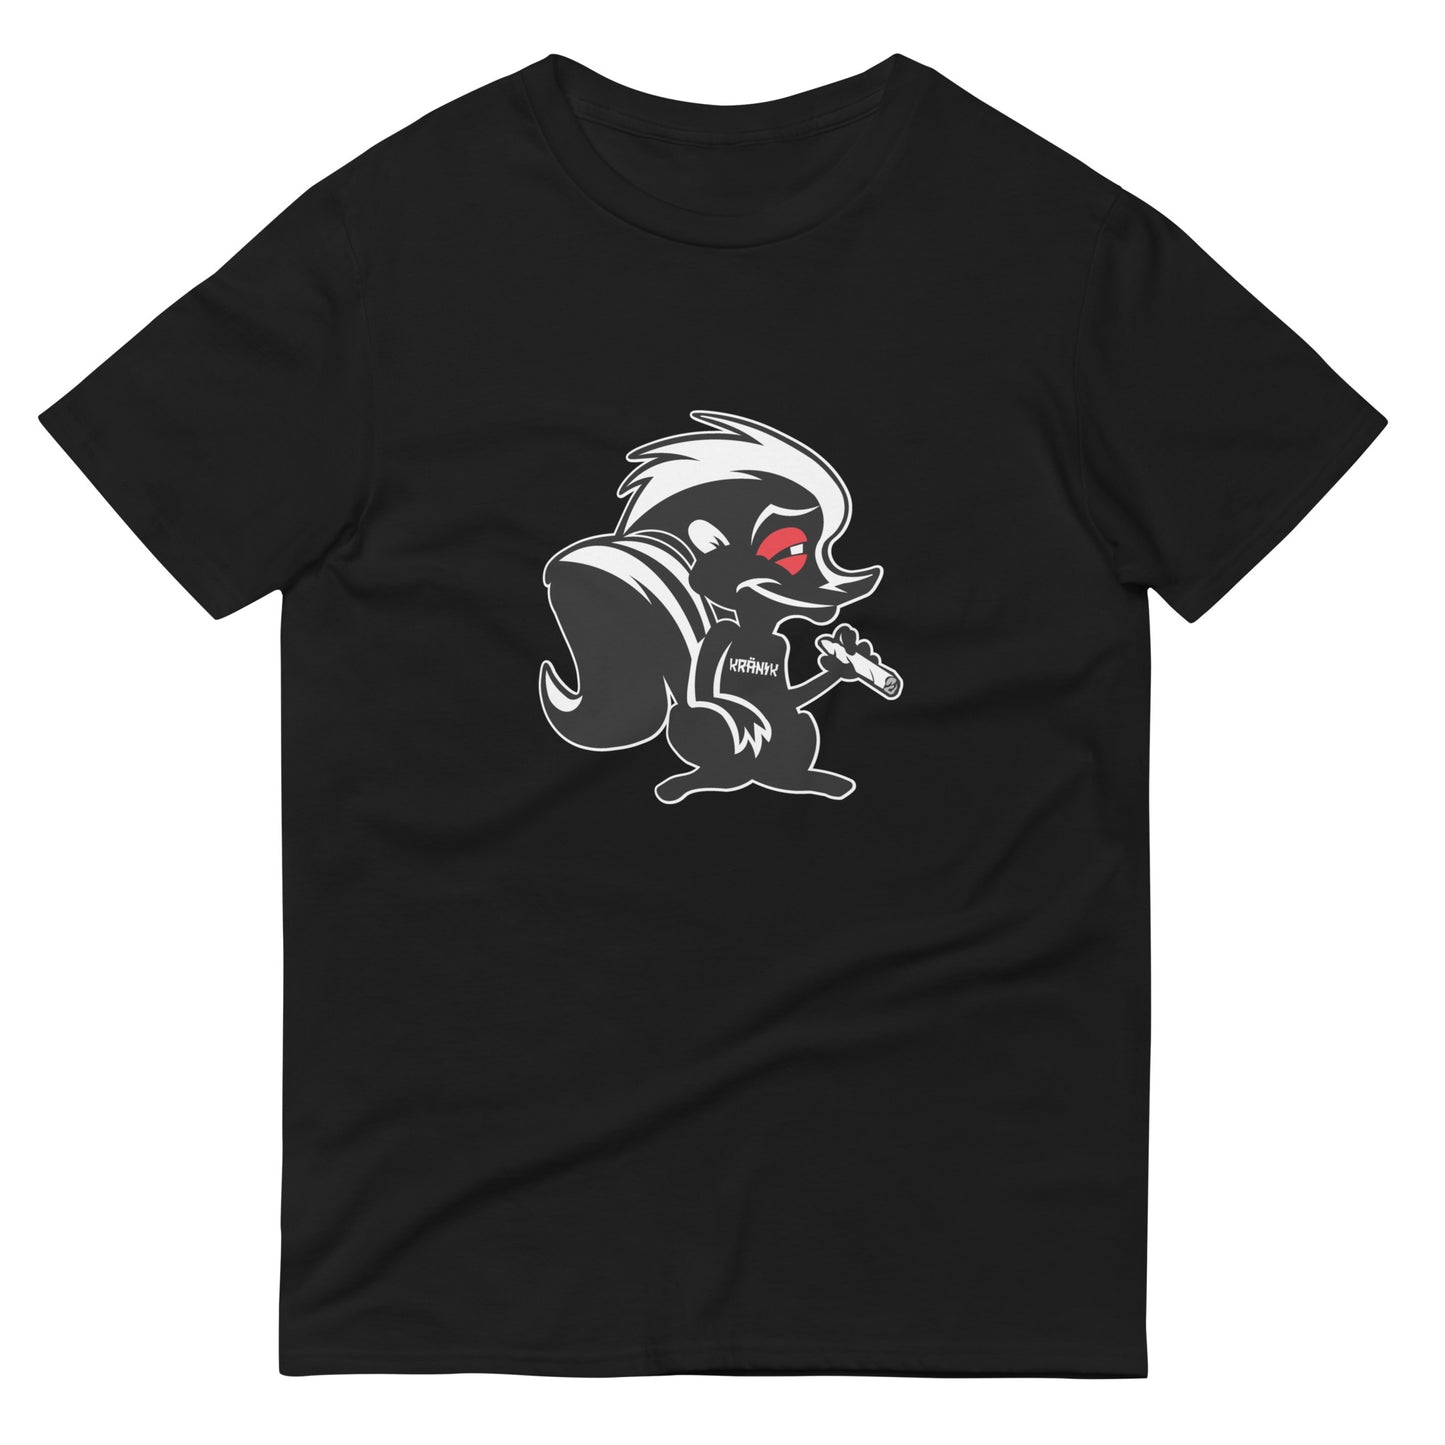 Kranik Brand / 420 Collection / T-Shirt / Unkle Skunk